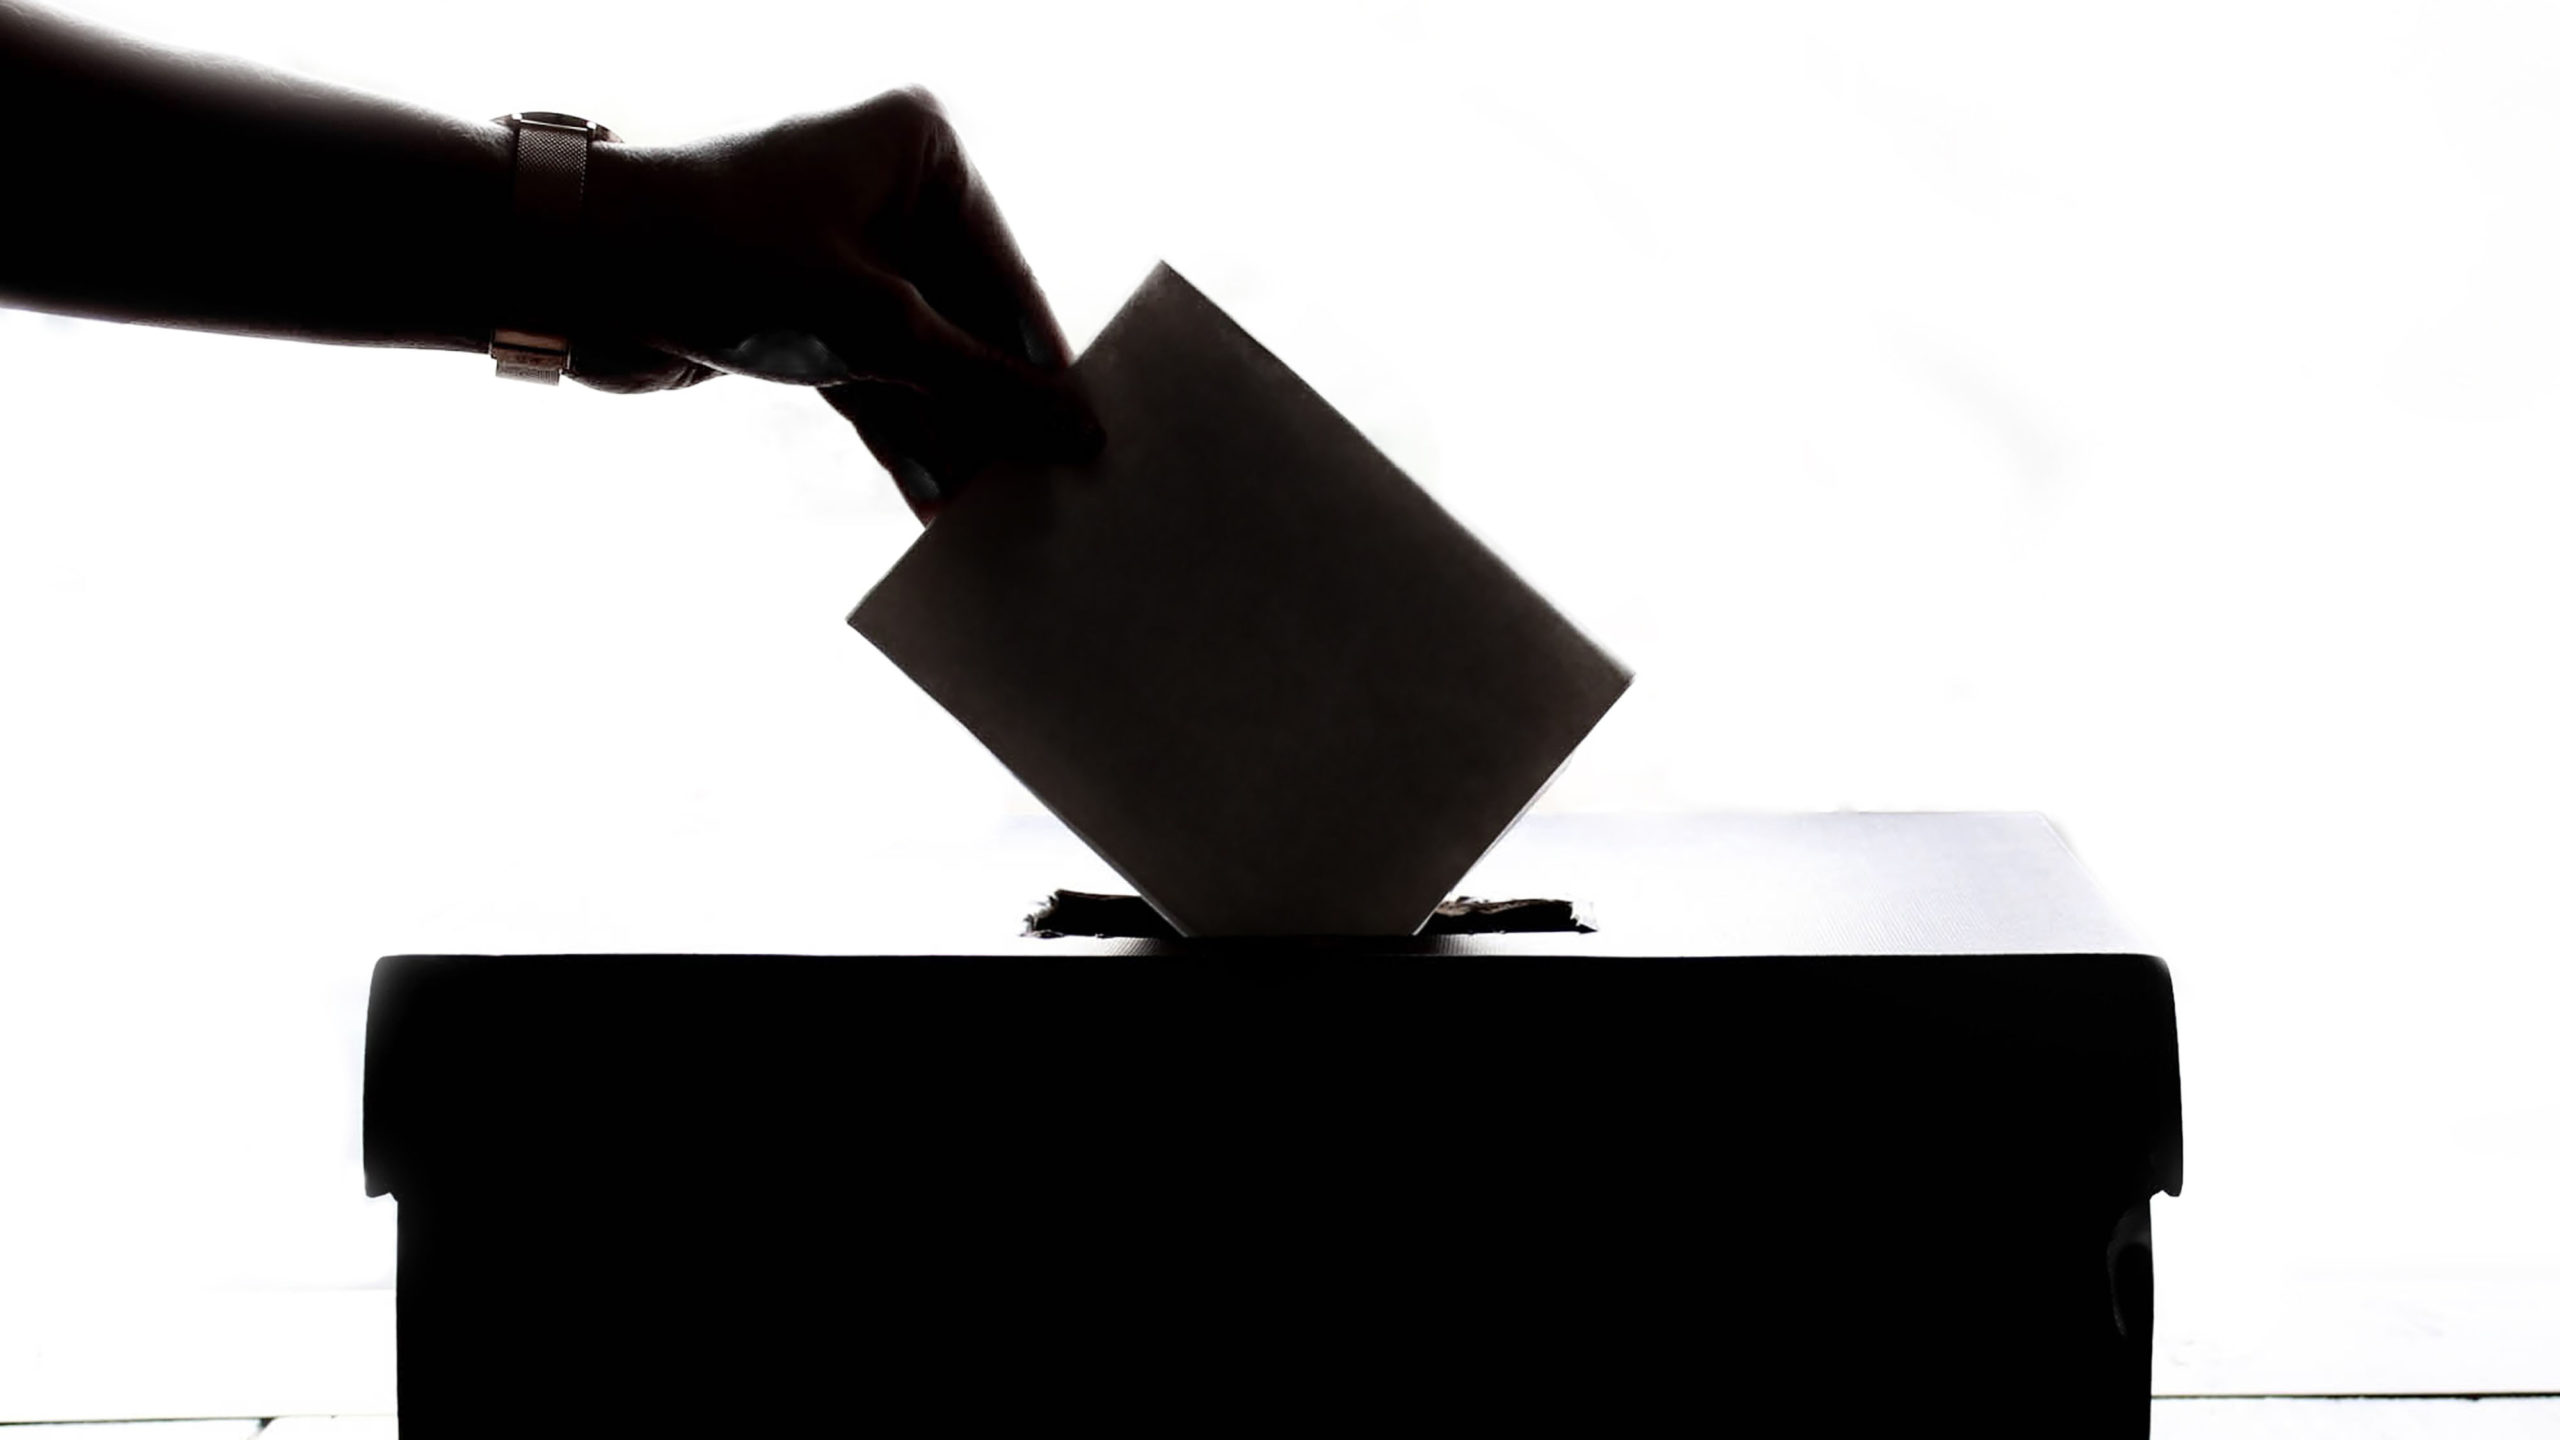 hand putting vote in ballot box silhouette.